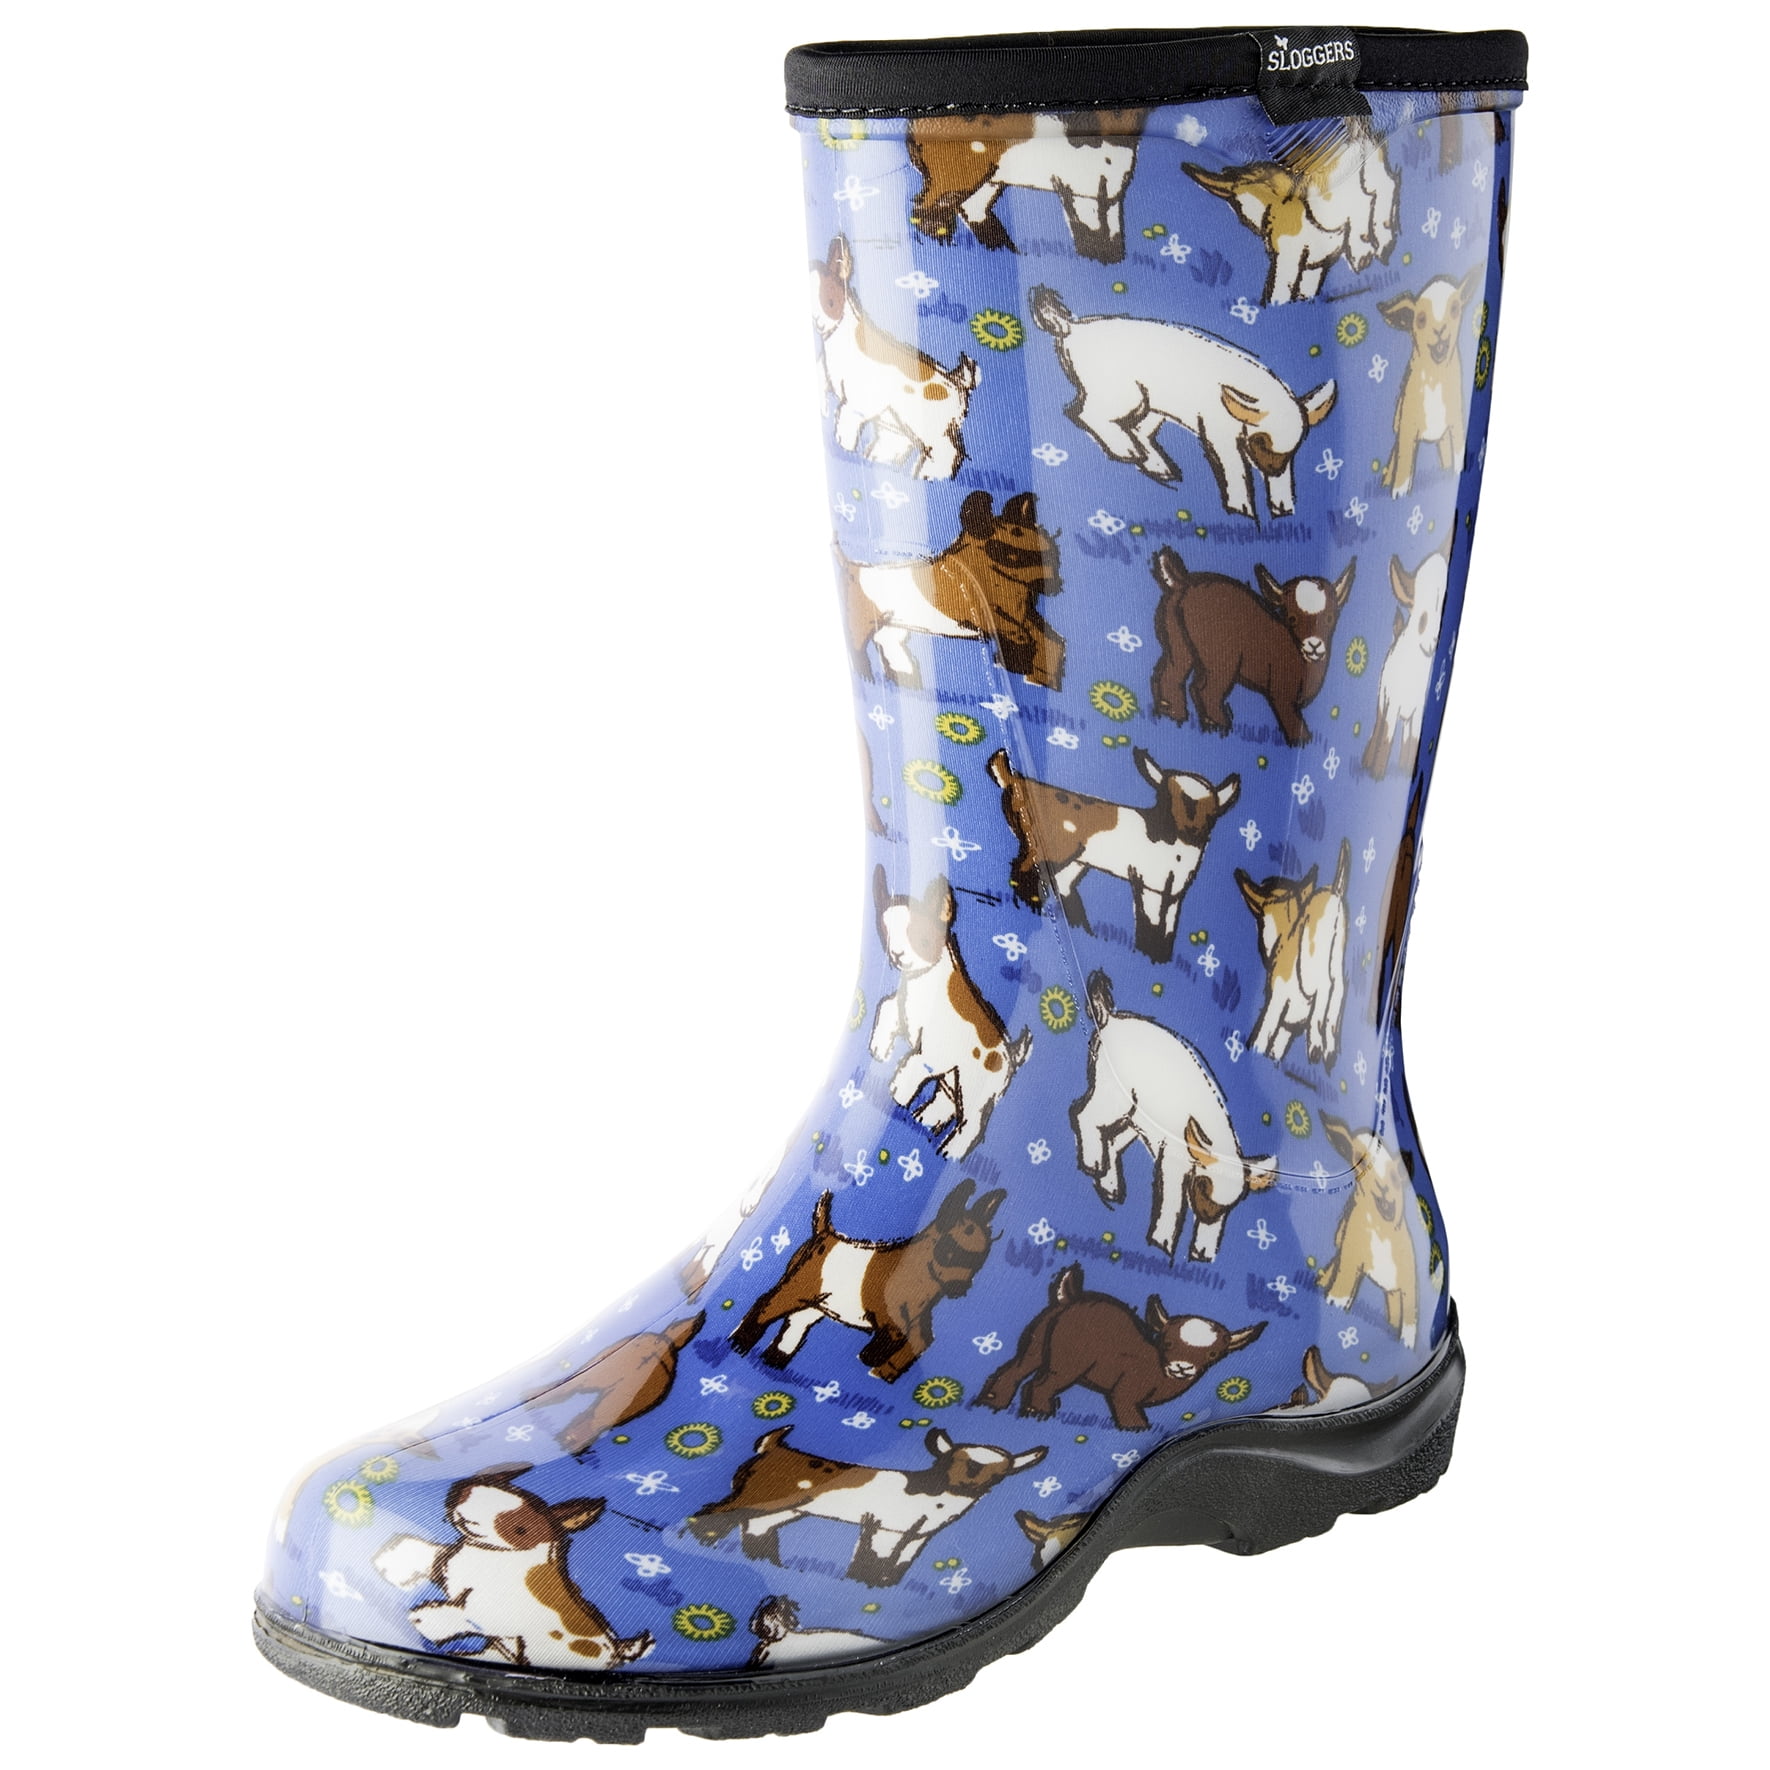 Sloggers Women's Rain & Garden Boots - Goats Sky Blue, Style 5018GOBL ...